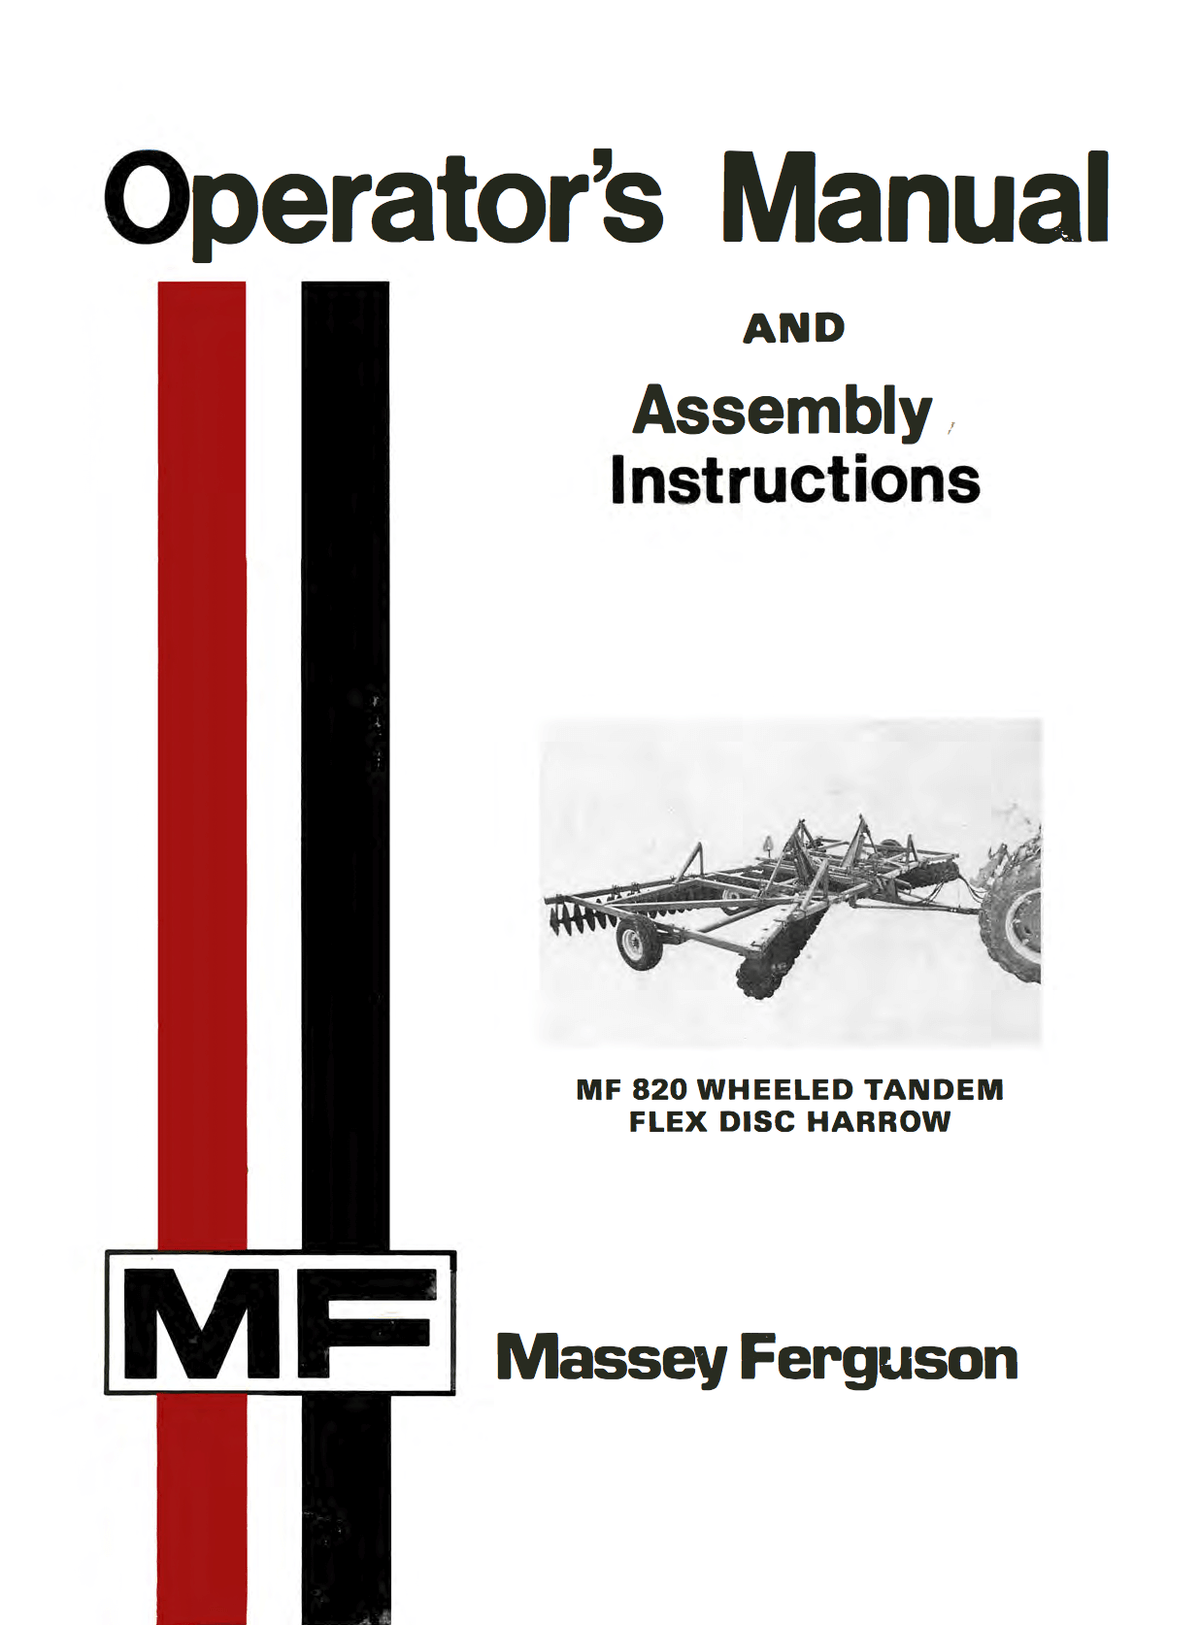 Massey Ferguson MF 820 Wheeled Tandem Flex Disc Harrow - Operator's Manual and Assembly Instructions - Ag Manuals - A Provider of Digital Farm Manuals - 1